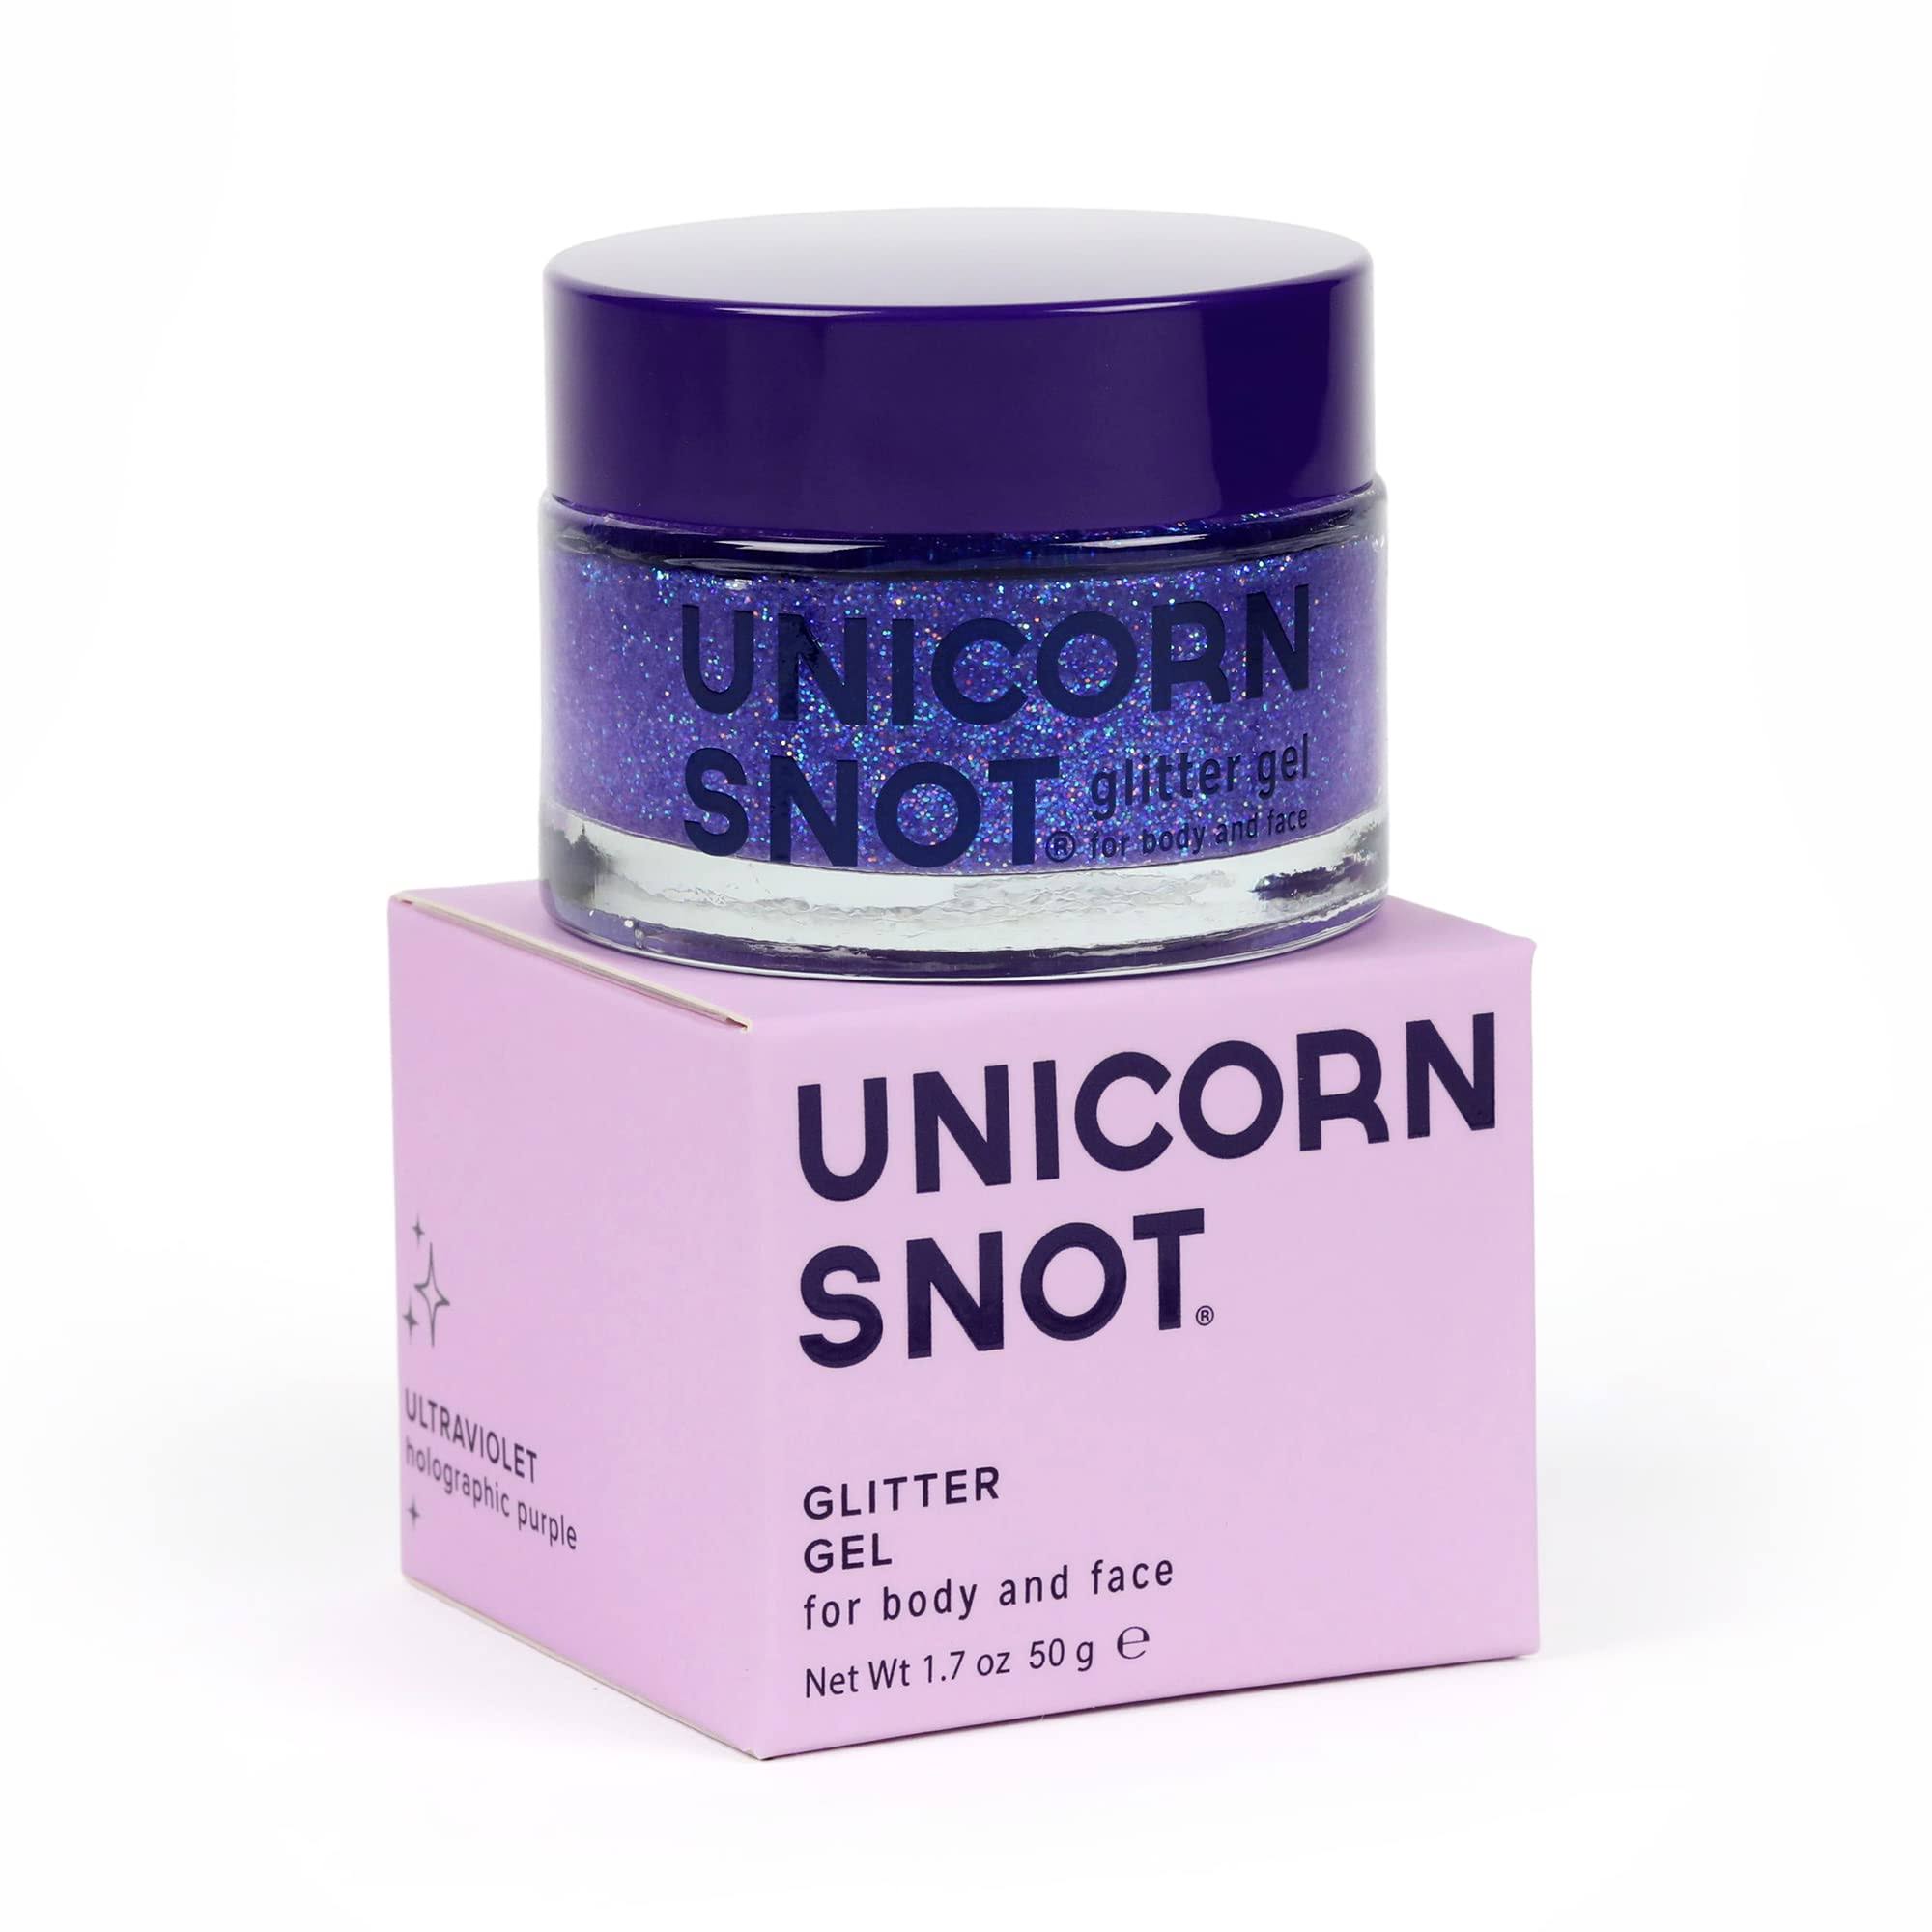 Unicorn Snot Holographic Body Glitter Gel for Body, Face, Hair - Vegan & Cruelty Free - 1.7 oz (Ultraviolet)